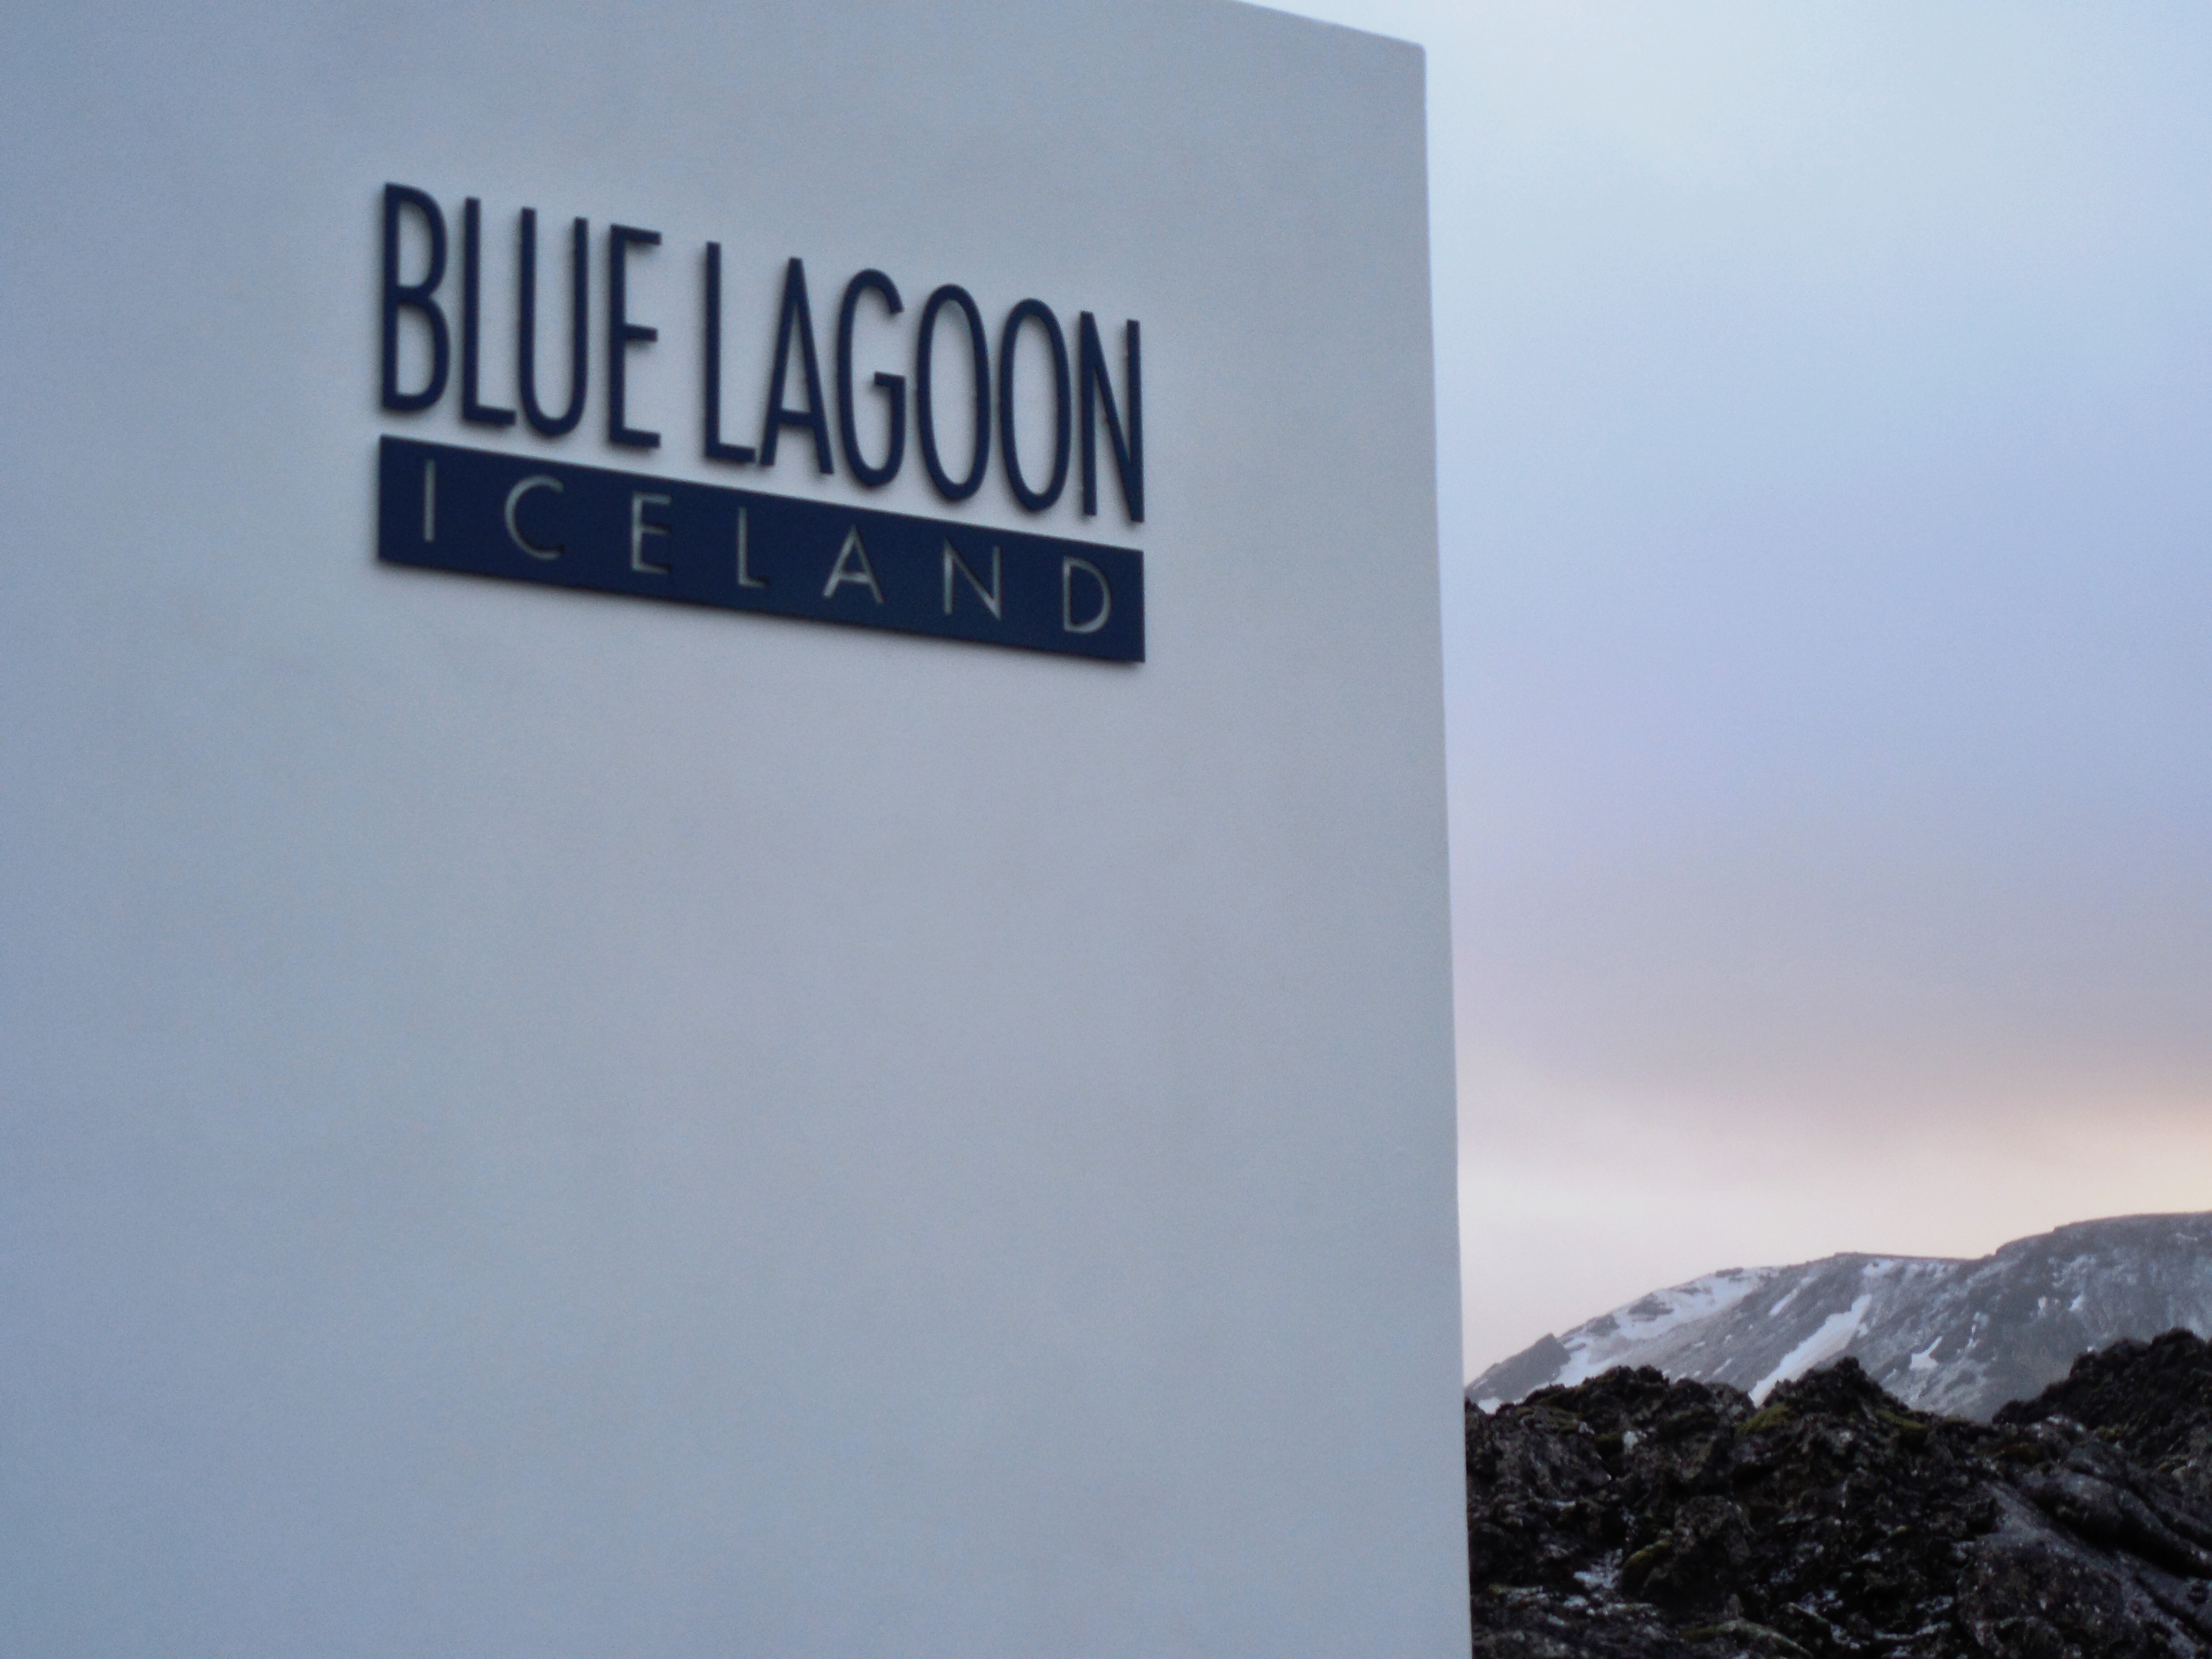 Blue Lagoon in Reykjavik, Iceland